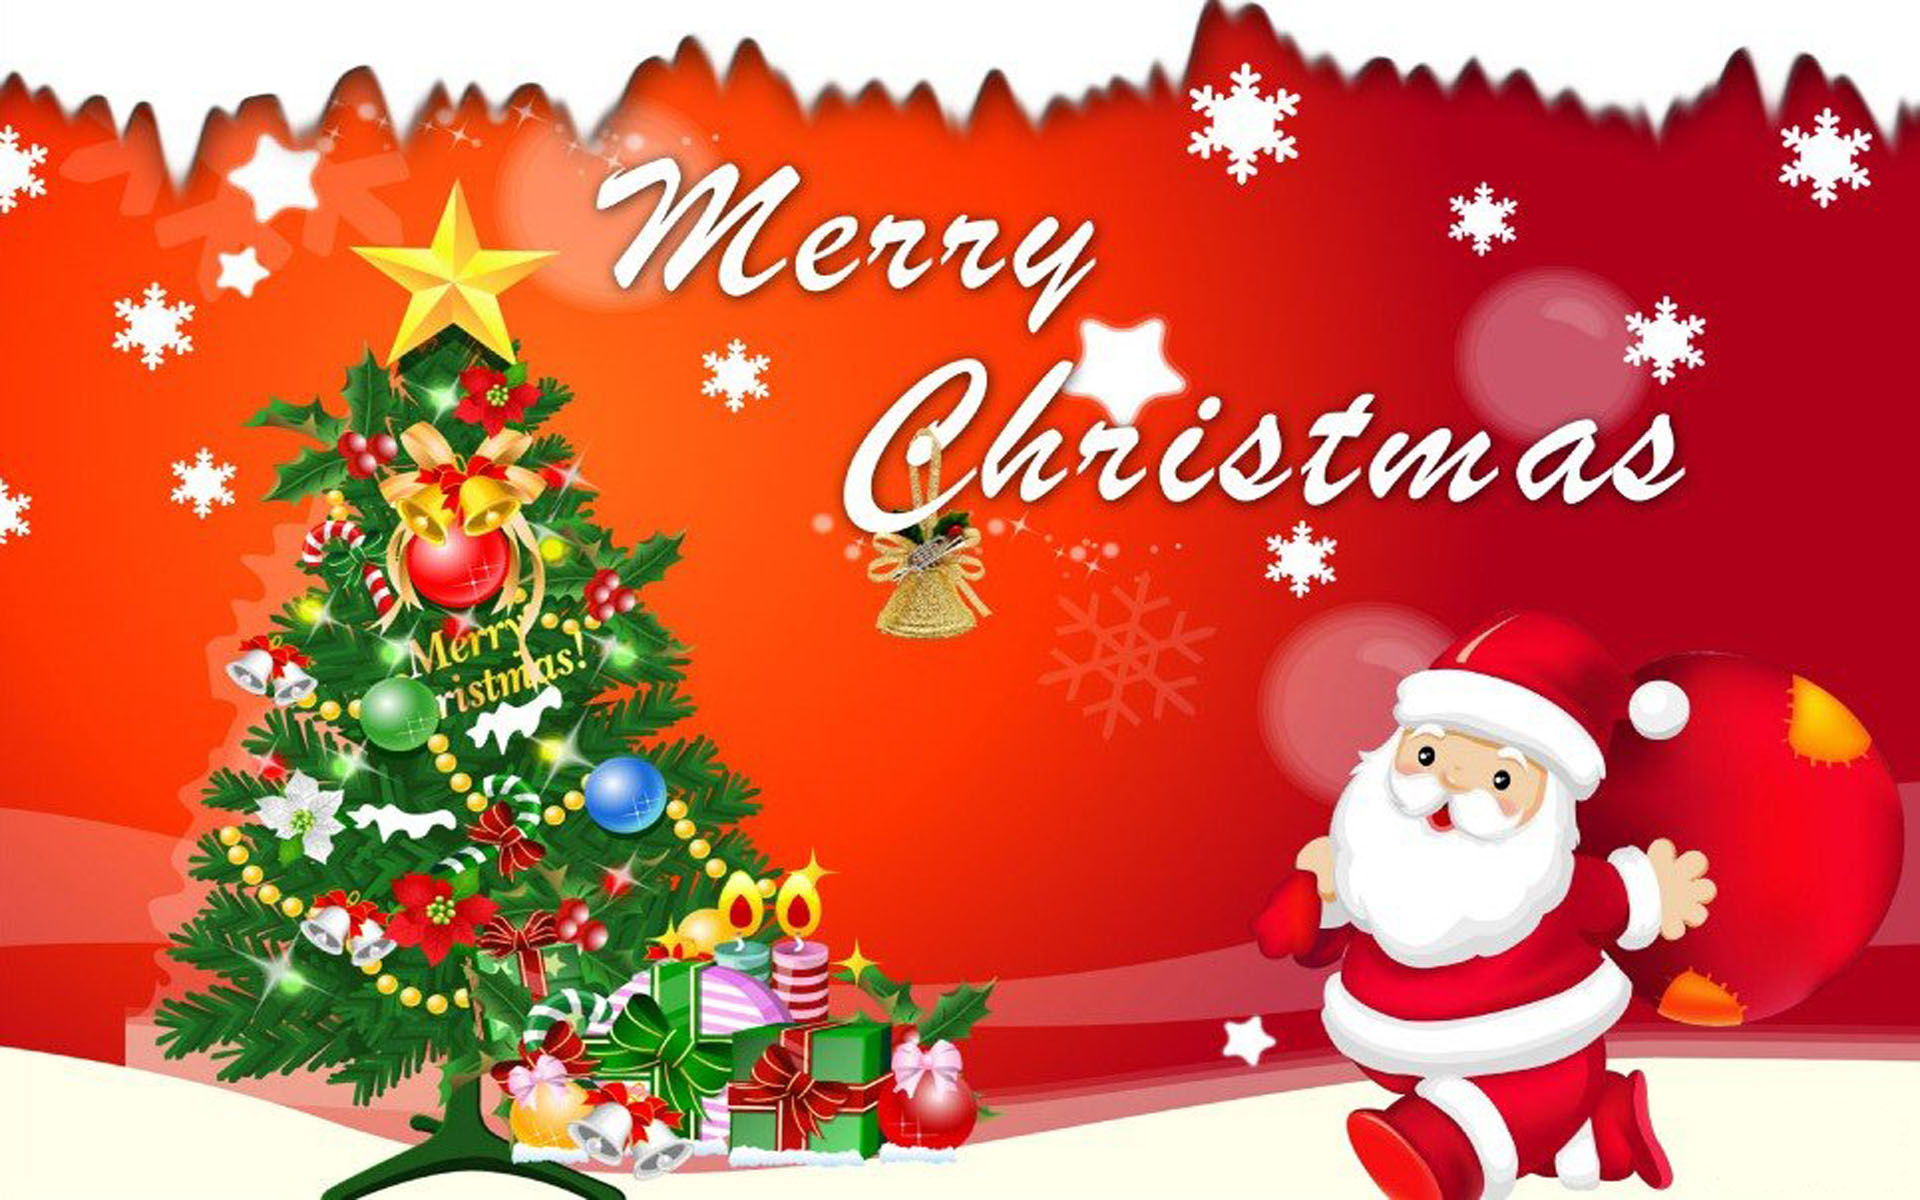 Merry Christmas Santa Claus Christmas Tree Decorations Greeting Card